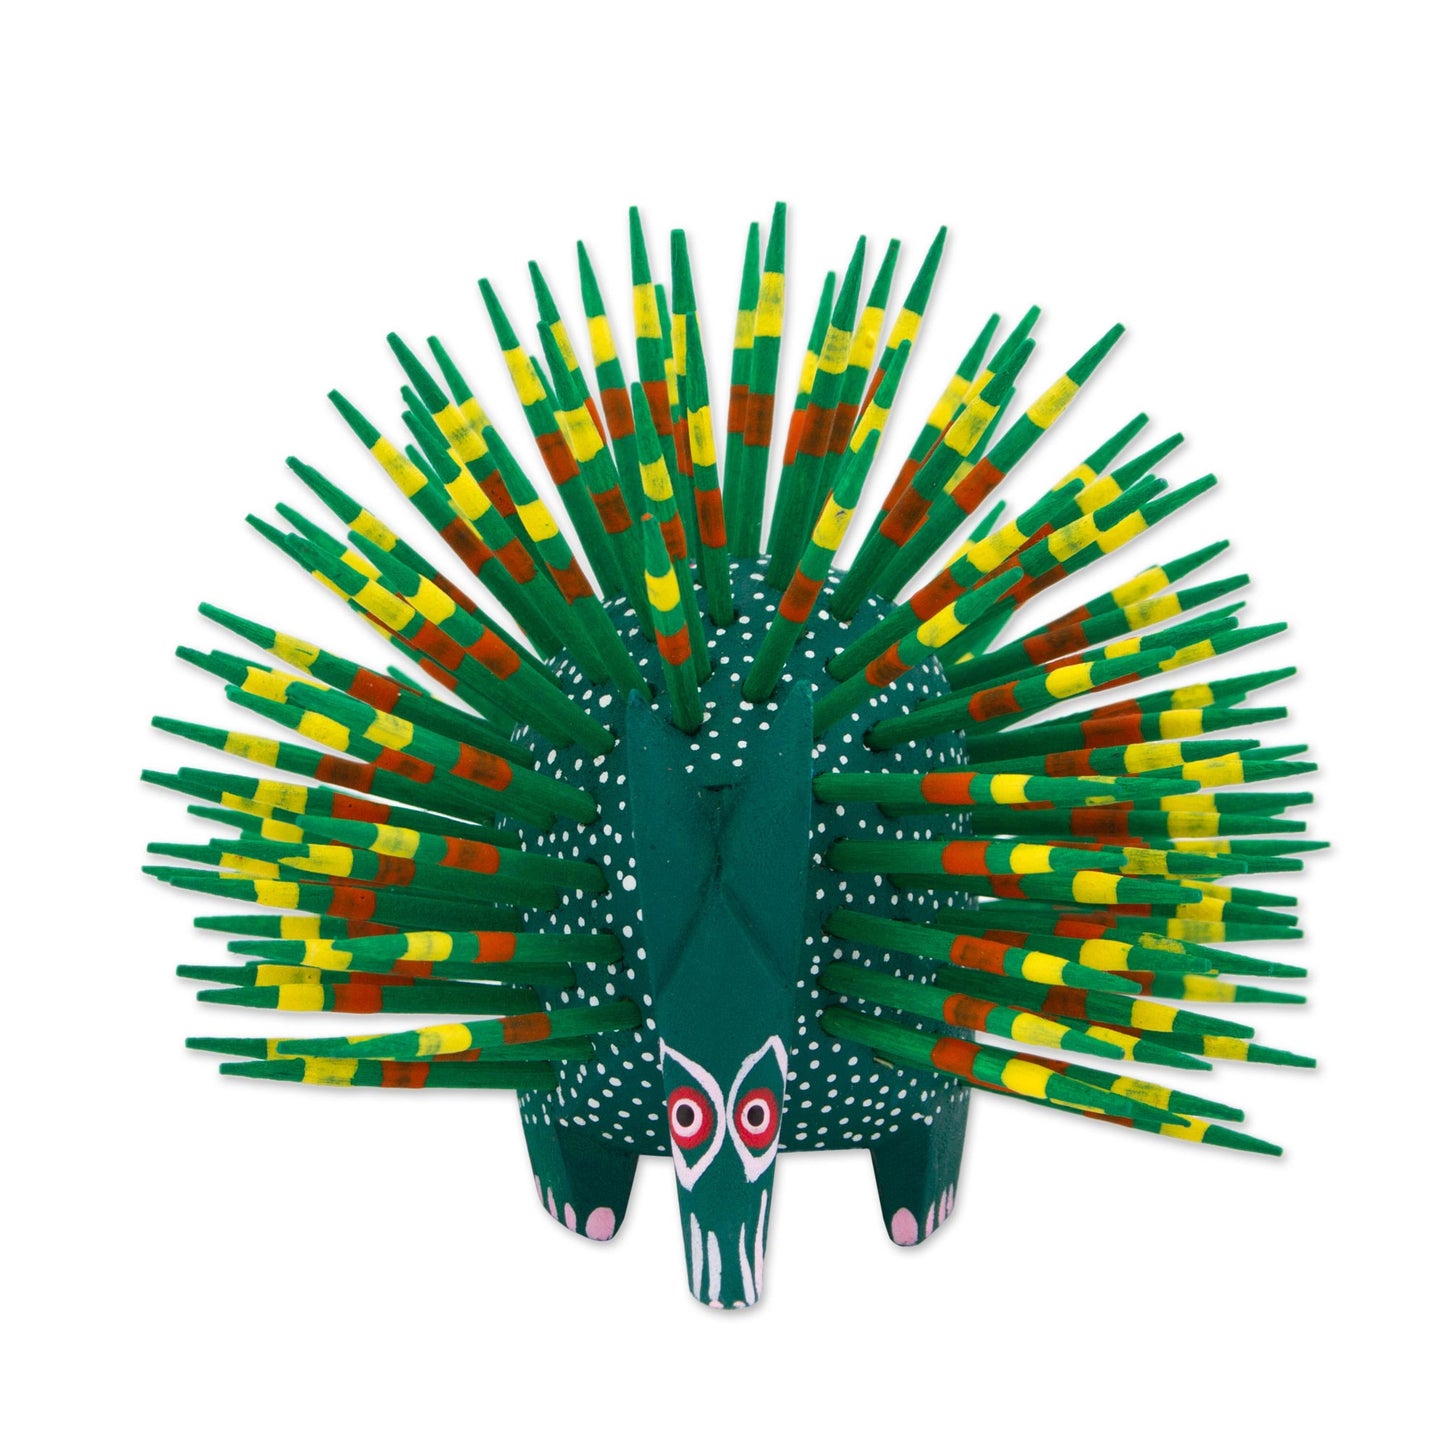 Green Alebrije Porcupine Sculpture